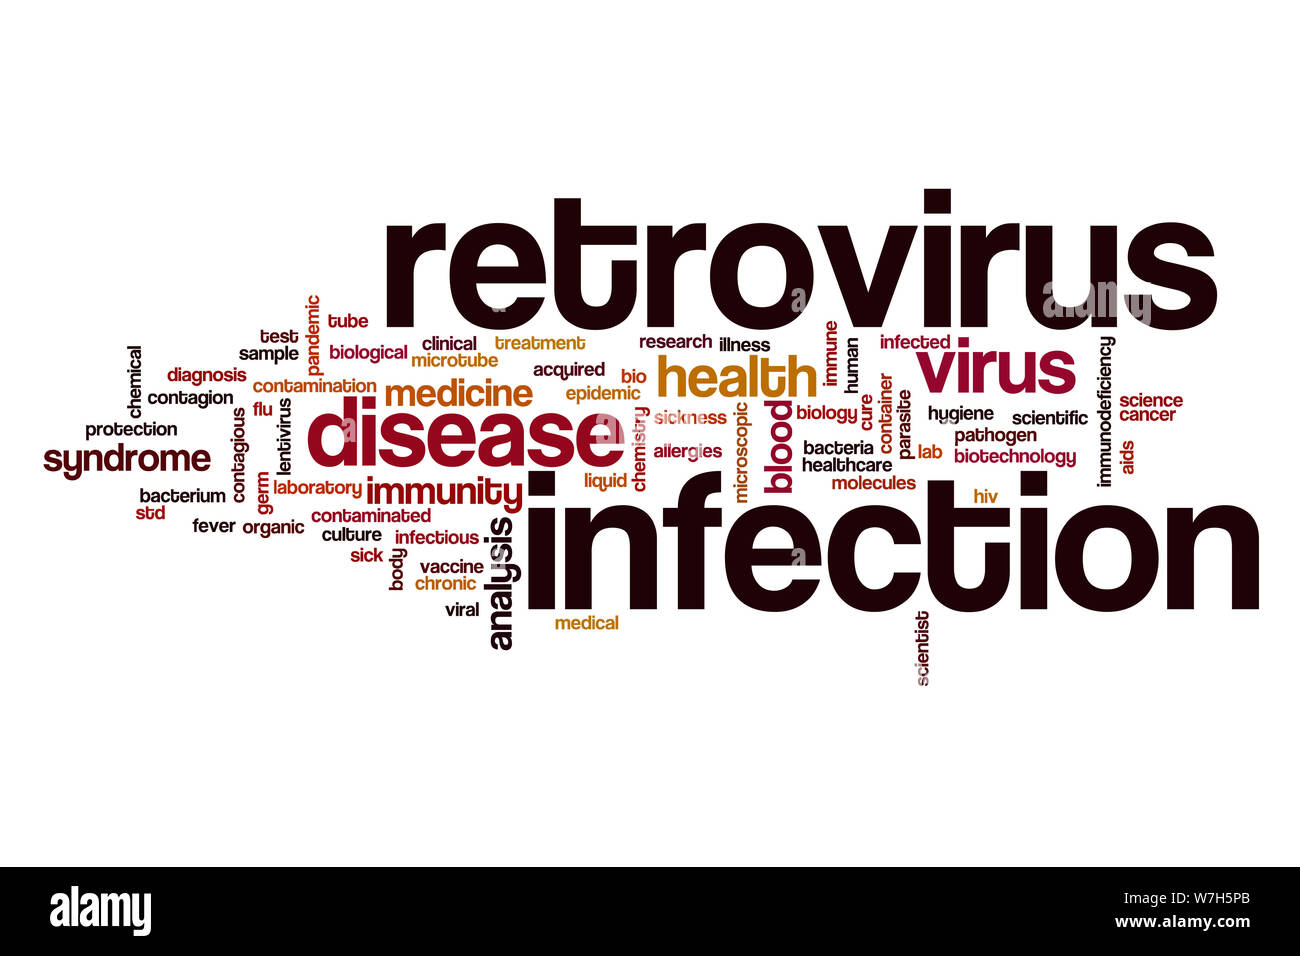 Retrovirus infection word cloud concept Stock Photo